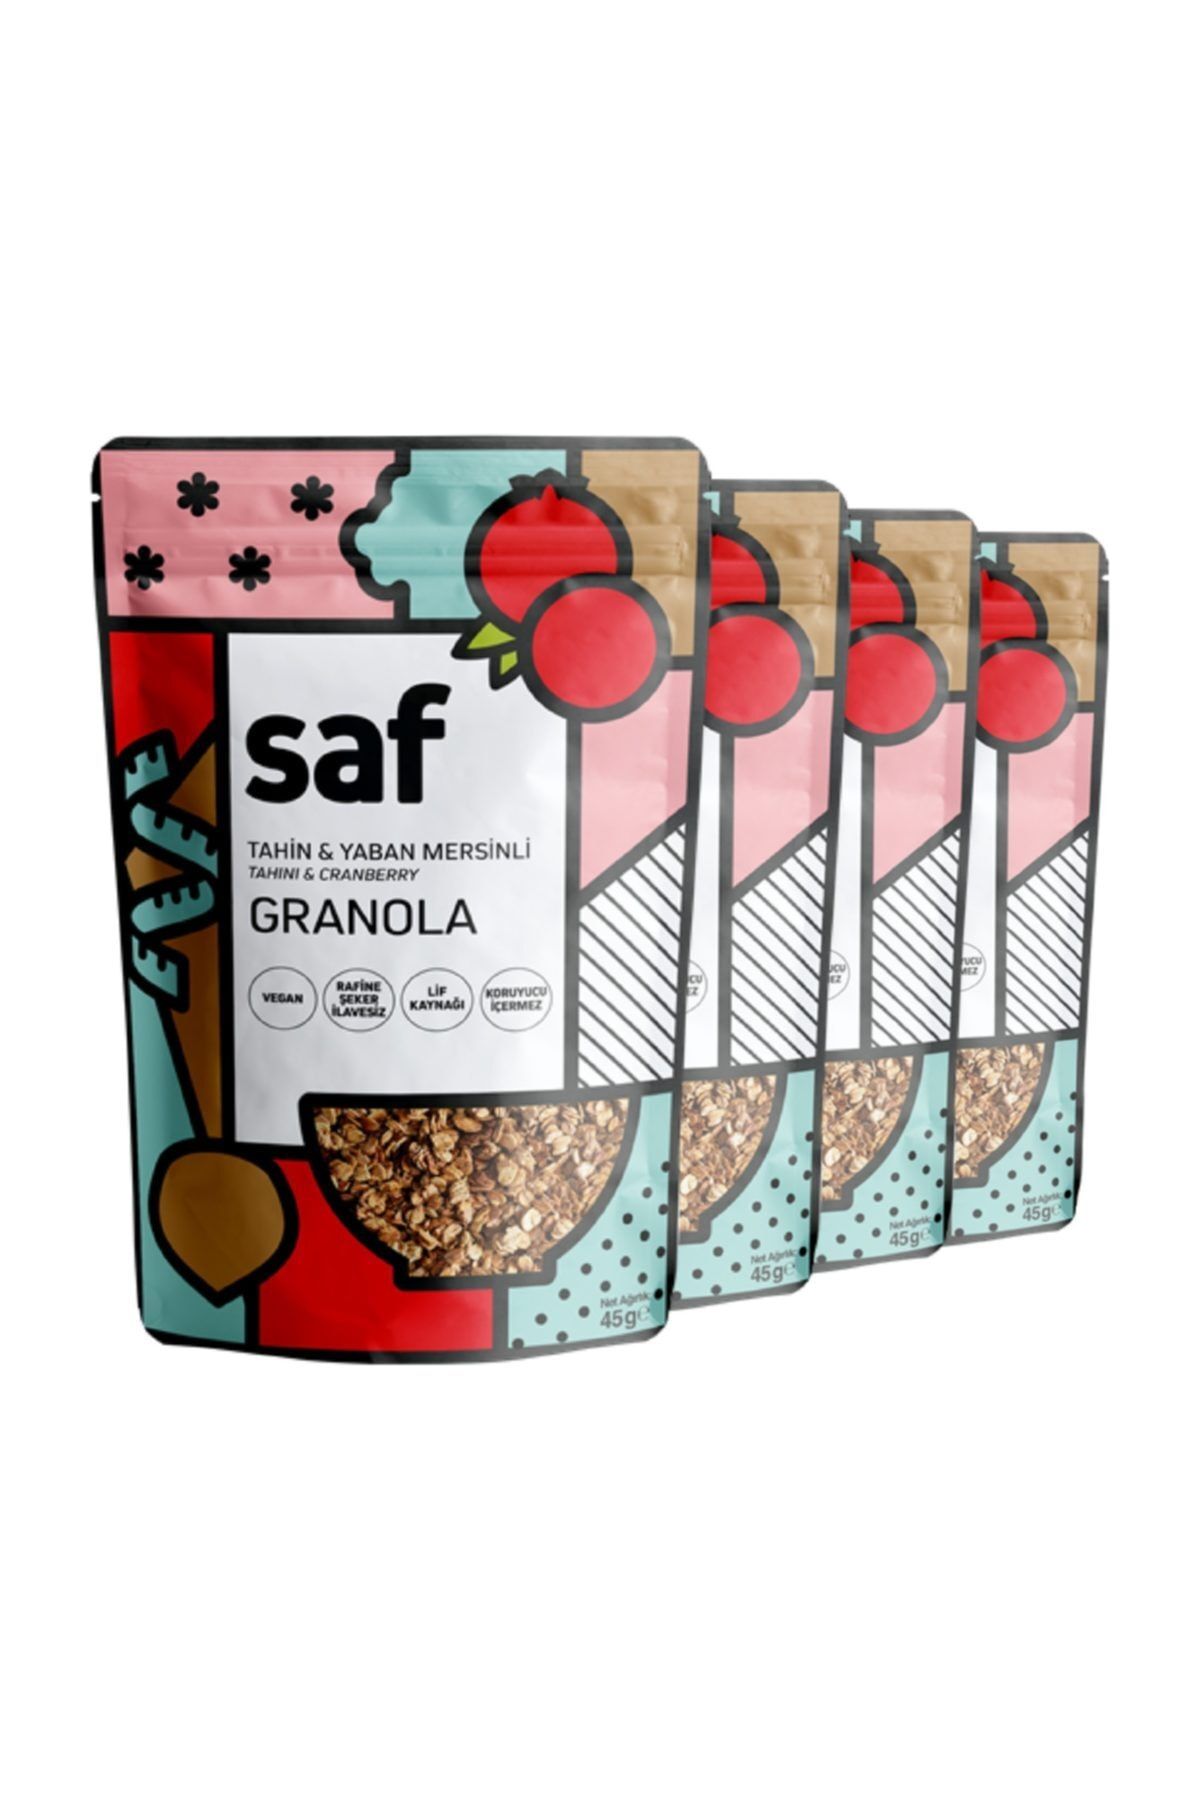 Saf Nutrition Tahinli & Yaban Mersinli Granola, 45grx4